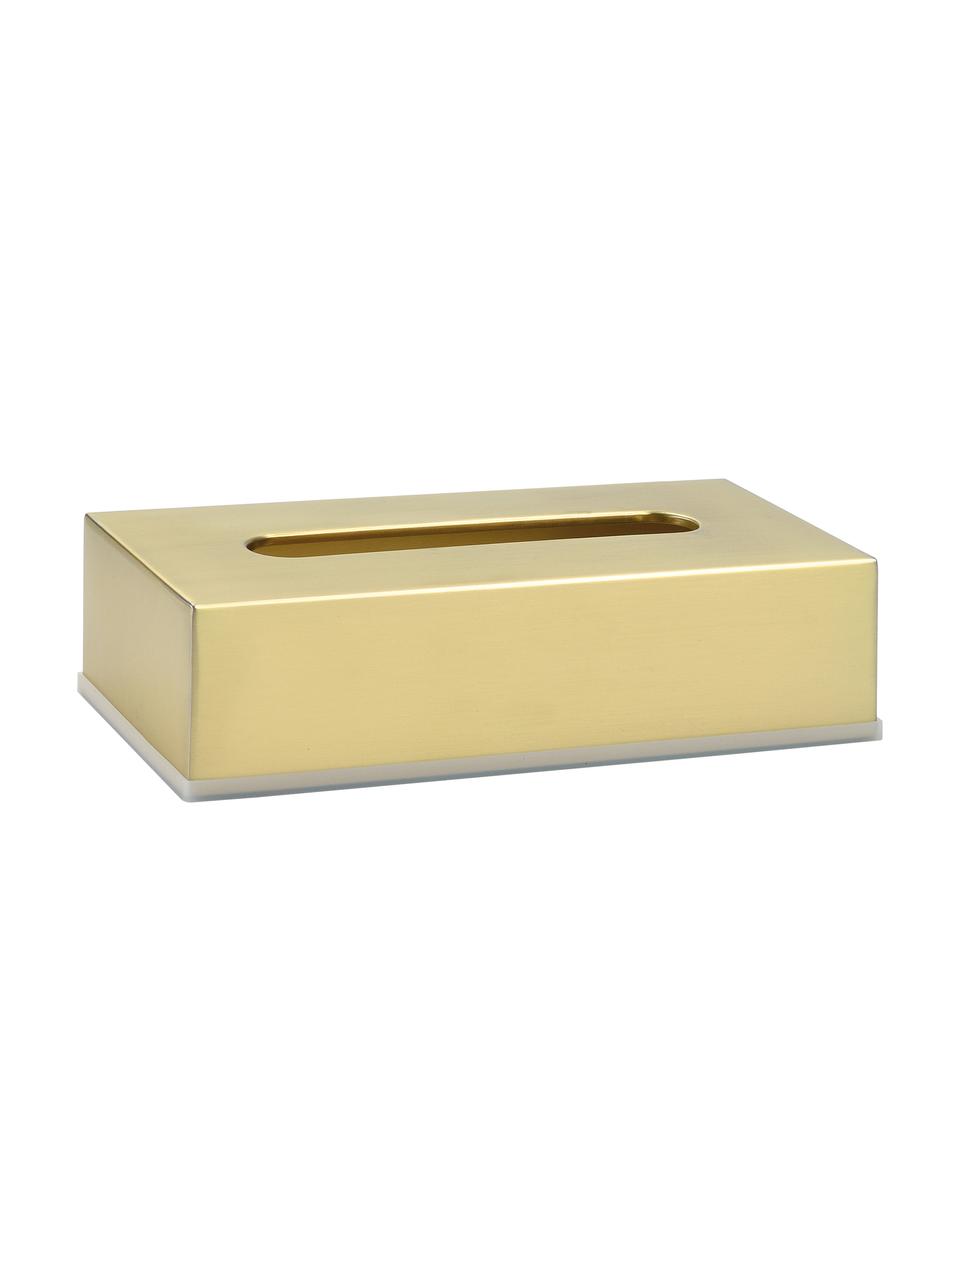 Kosmetiktuchbox Acton, Edelstahl, beschichtet, Messingfarben, B 26 x T 13 cm